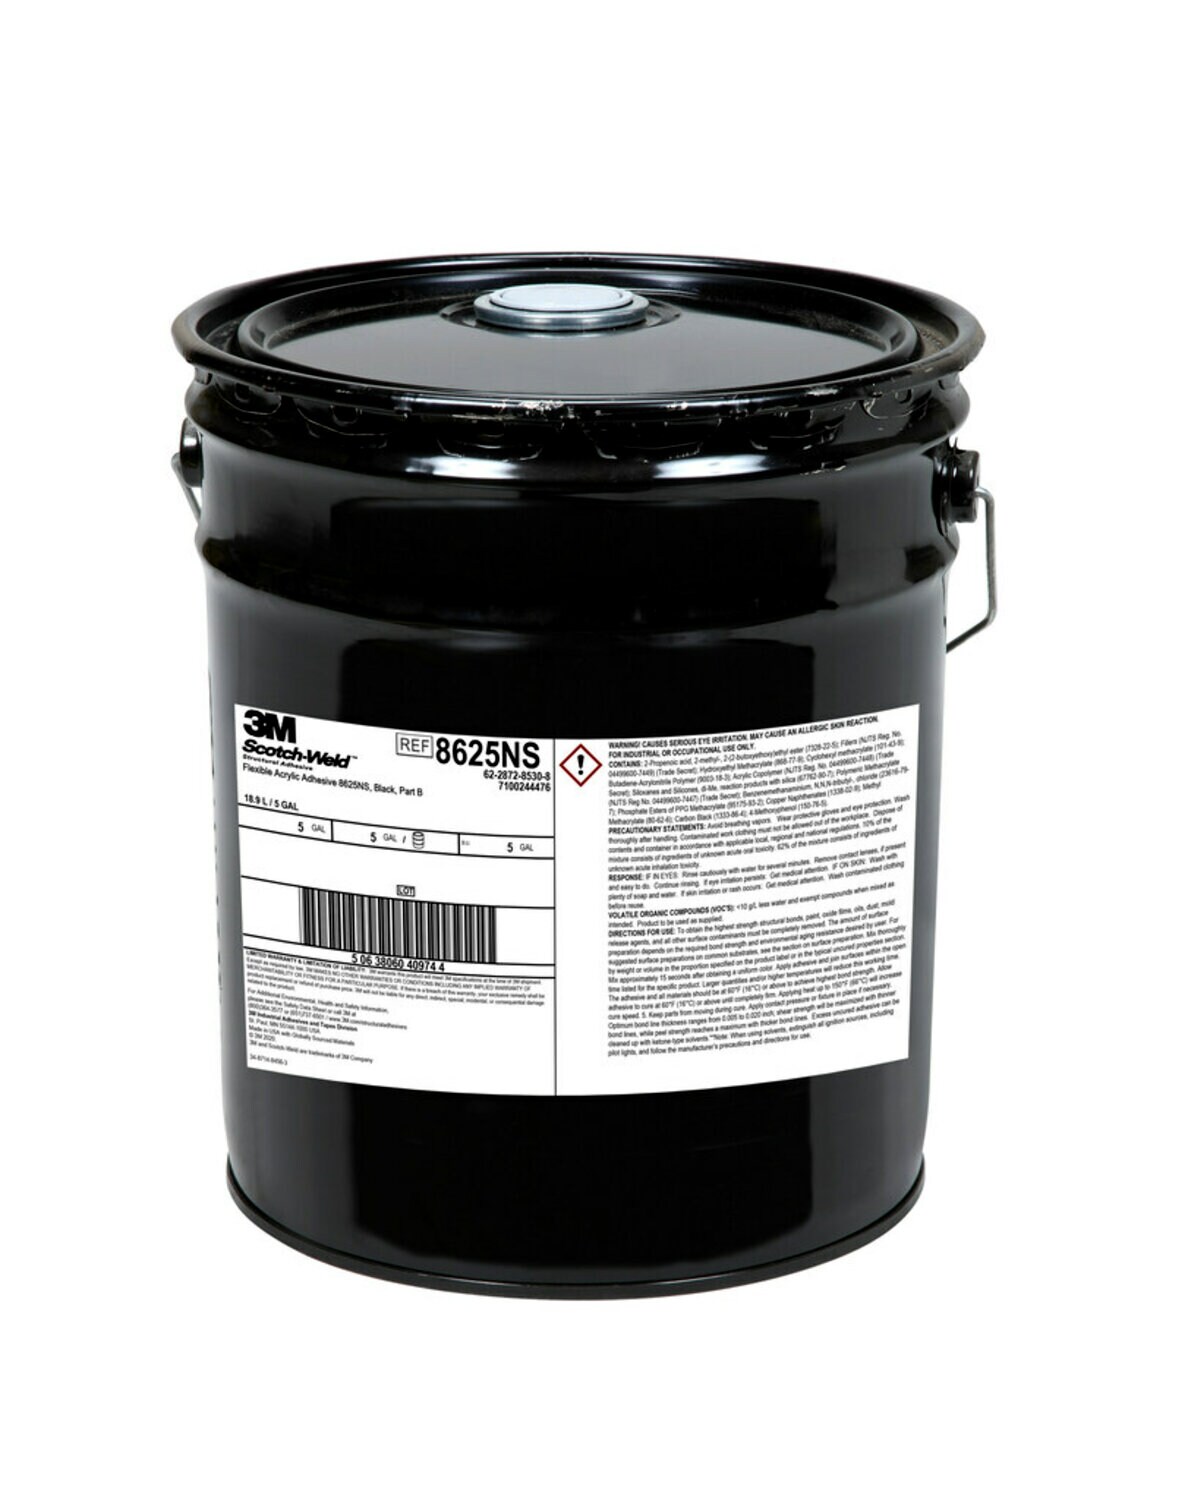 7100244476 - 3M Scotch-Weld Flexible Acrylic Adhesive 8625NS, Black, Part B, 5
Gallon (Pail), Drum